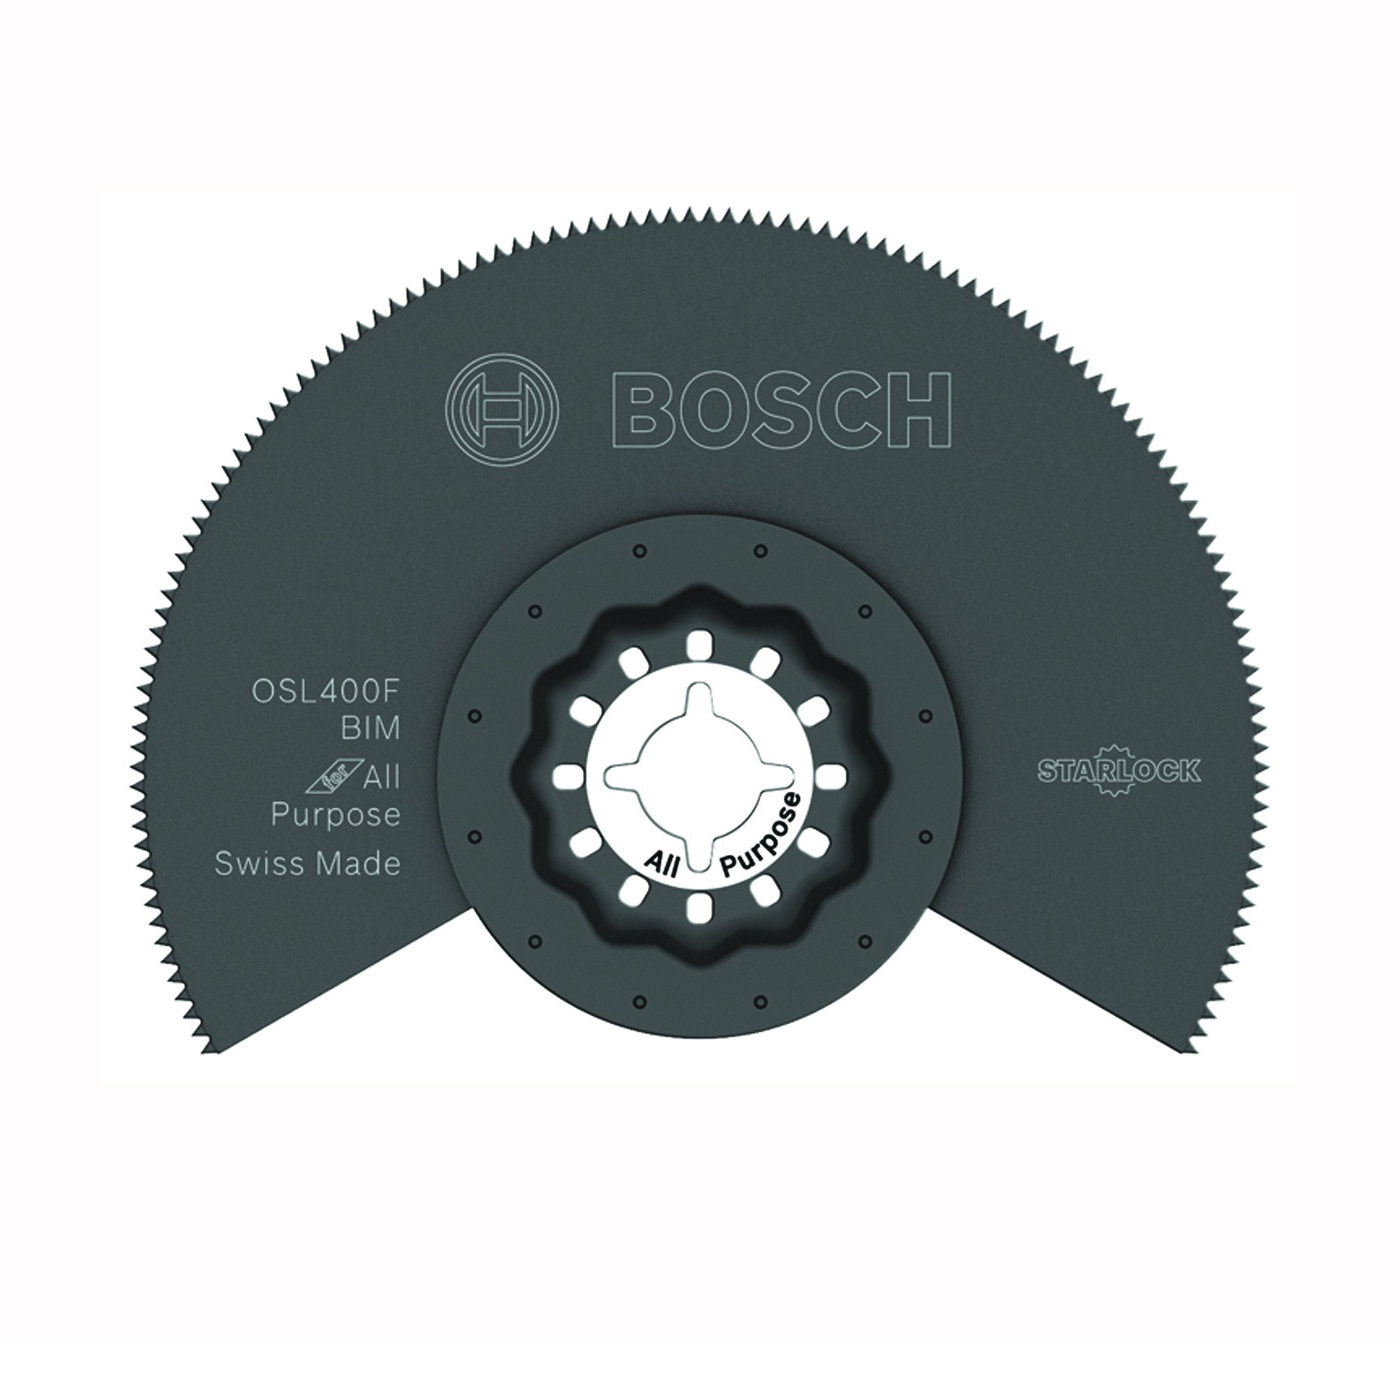 Bosch Starlock OSL400F Oscillating Saw Blade, 4 in, Bi-Metal - 1